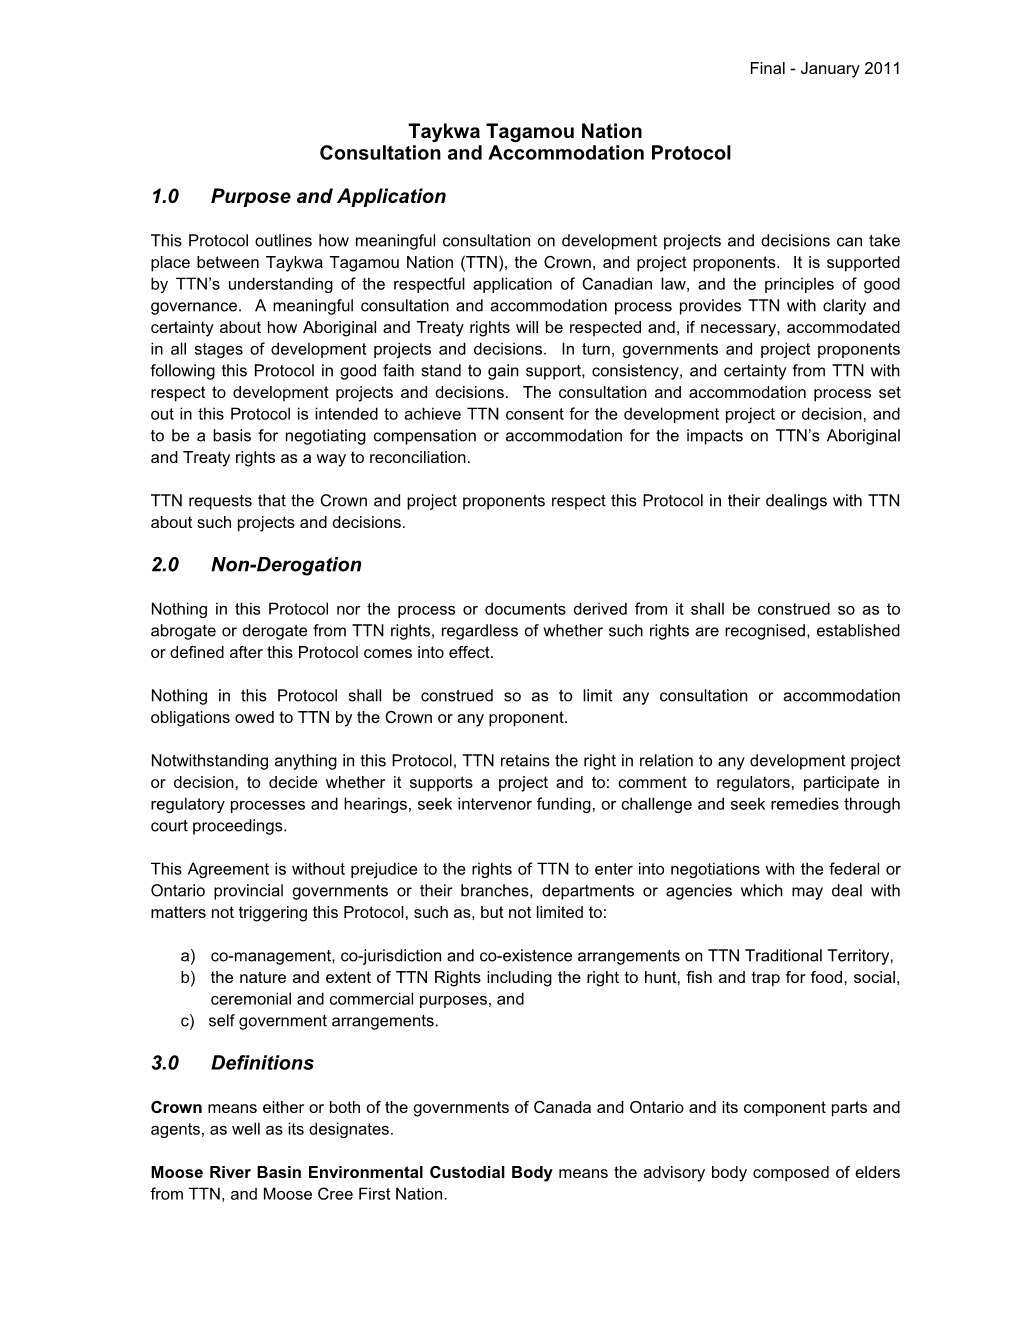 Taykwa Tagamou Nation Consultation and Accommodation Protocol 1.0